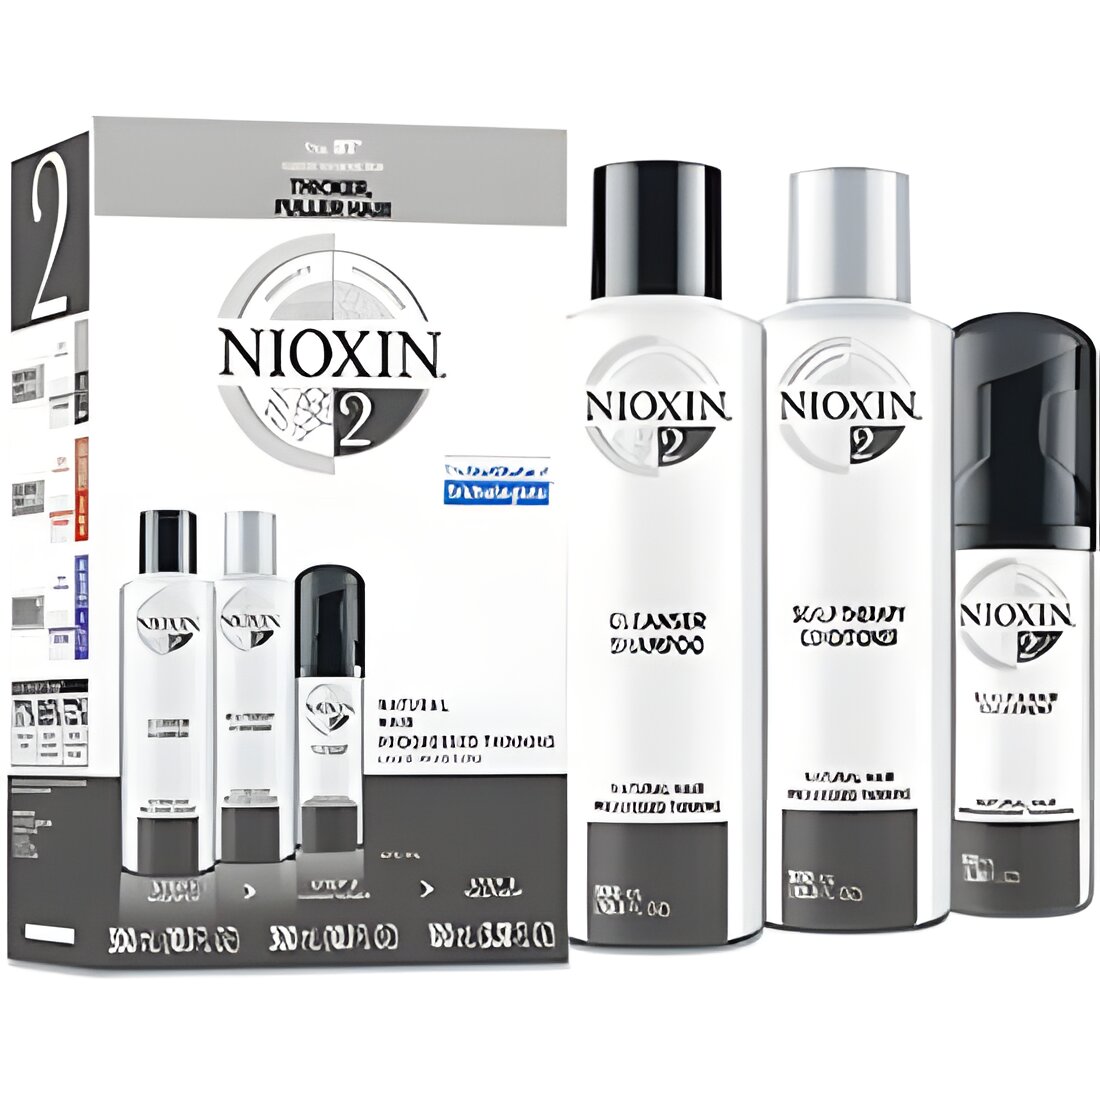 Free Nioxin Hair Loss Repair System Kit